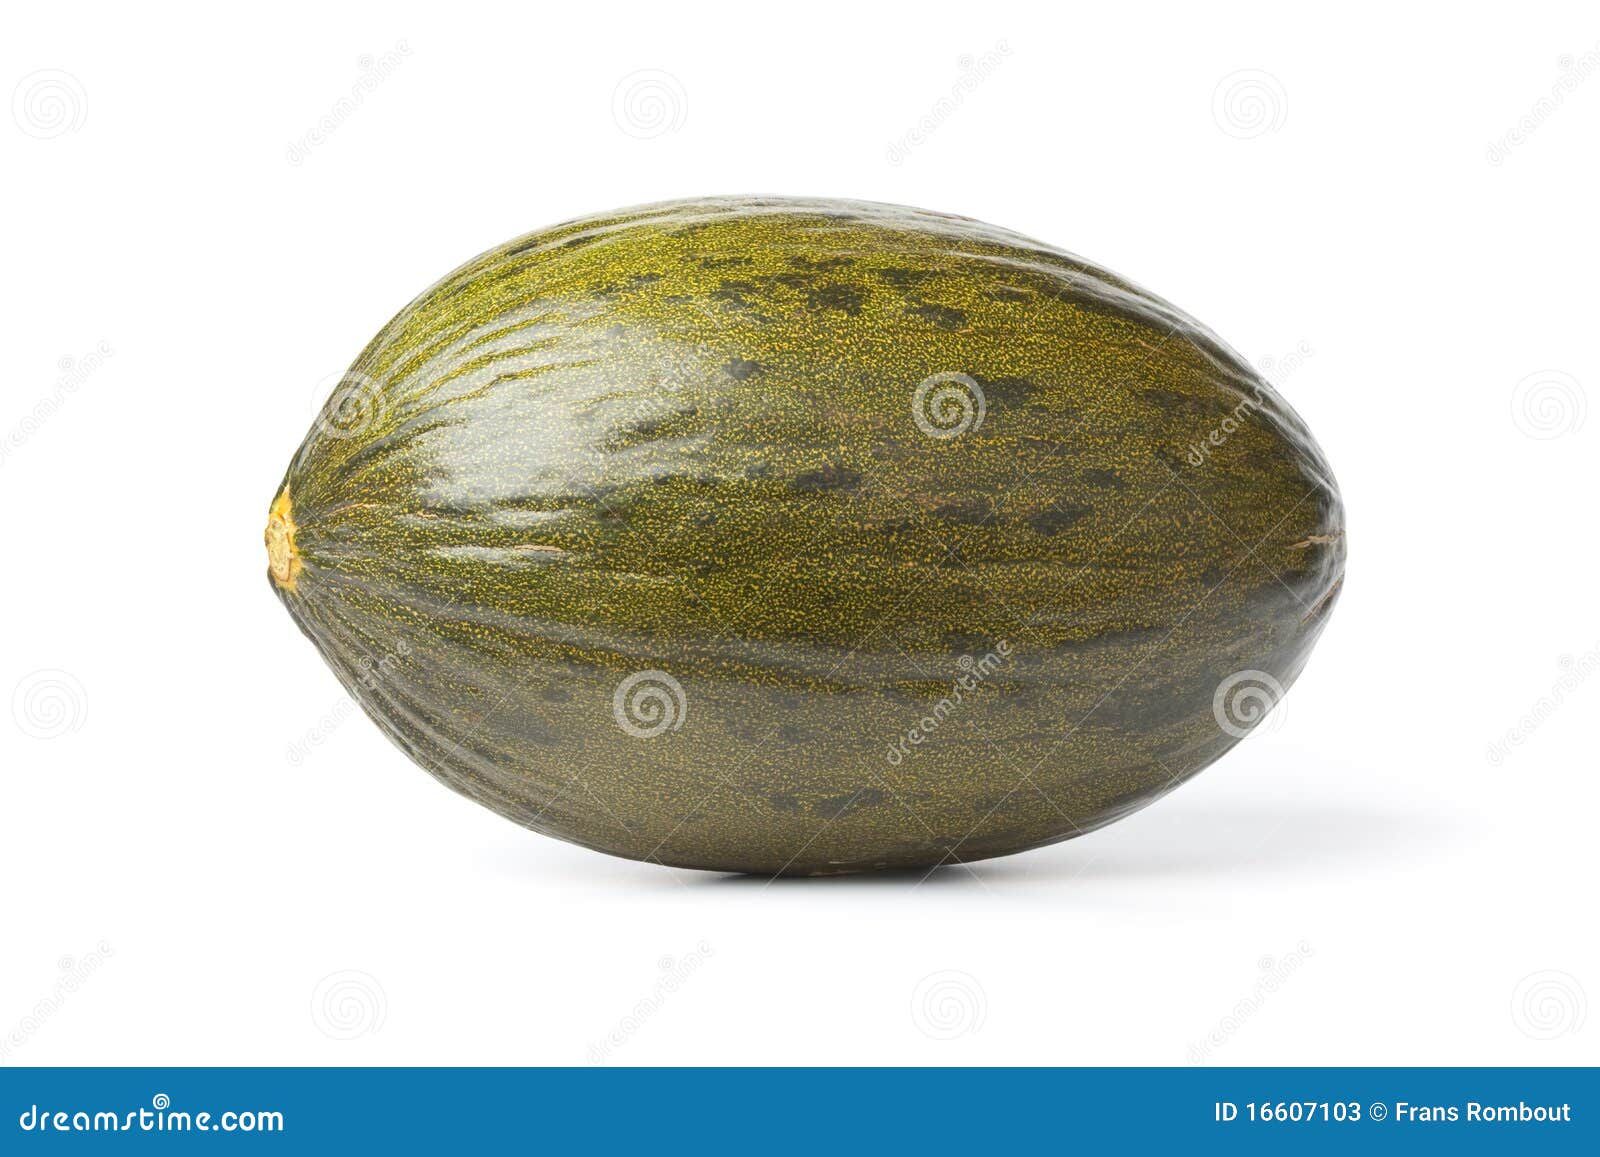 whole single piel de sapo melon